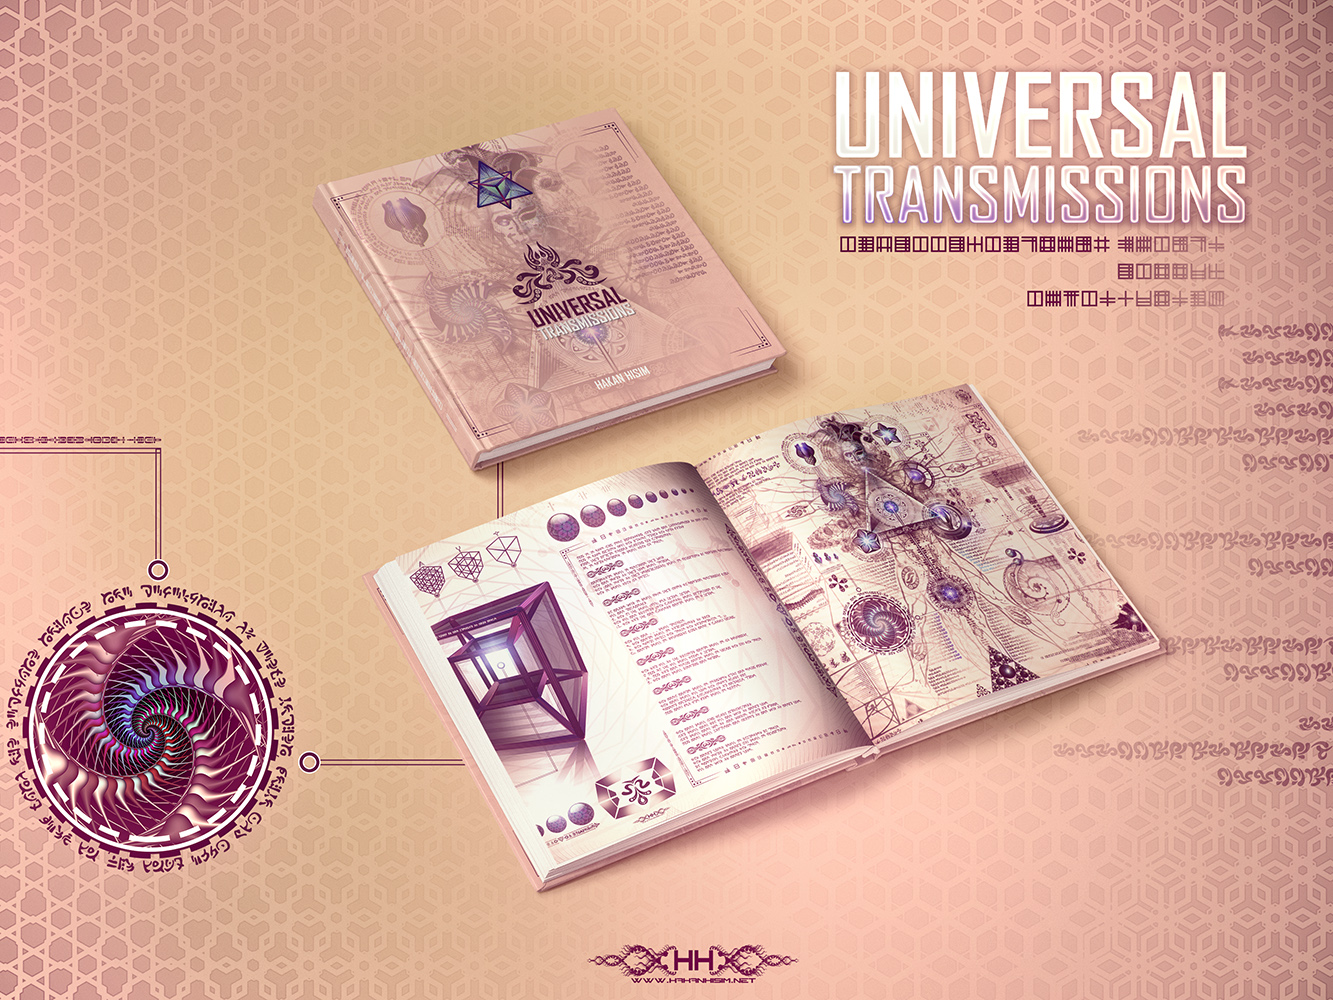 UNIVERSAL TRANSMISSIONS MOCKUP 2.jpg